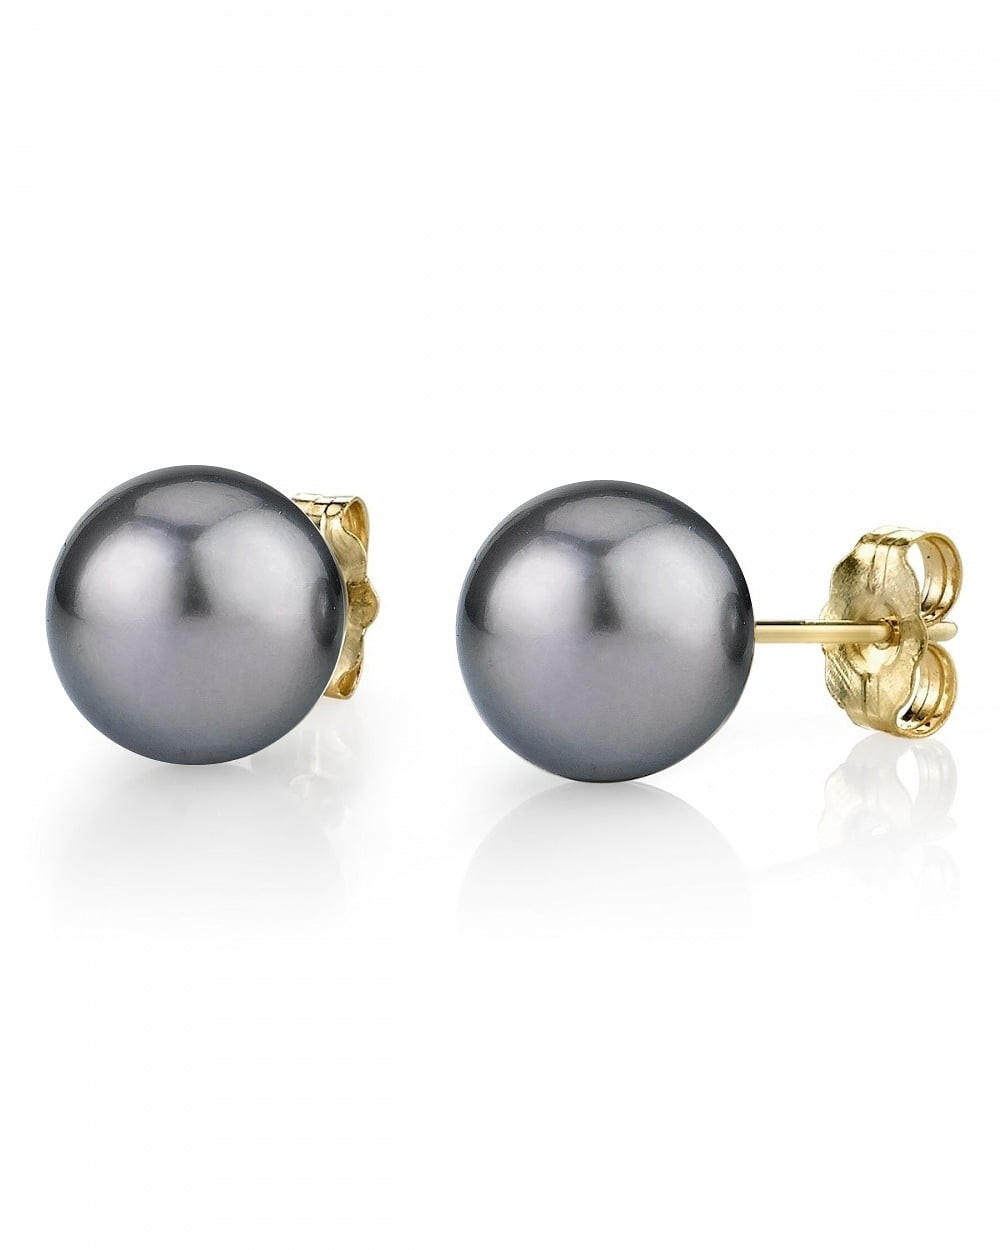 AAAA Quality Silver Tahitian South Sea Cultured Pearl Stud Earrings in 14K Gold